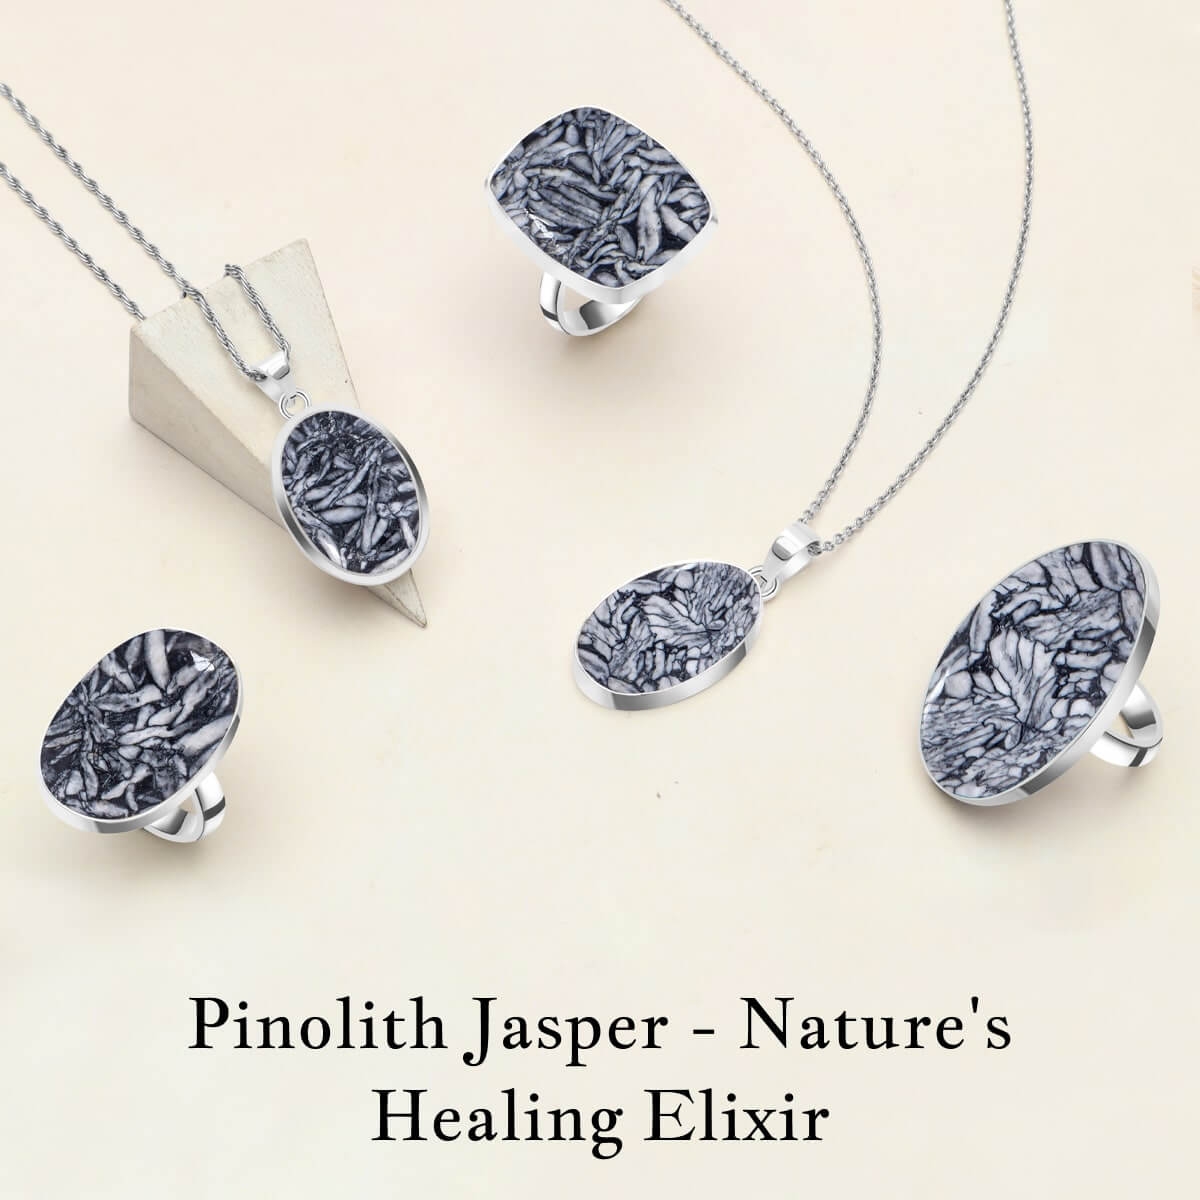 Pinolith Jasper: Healing properties and benefits